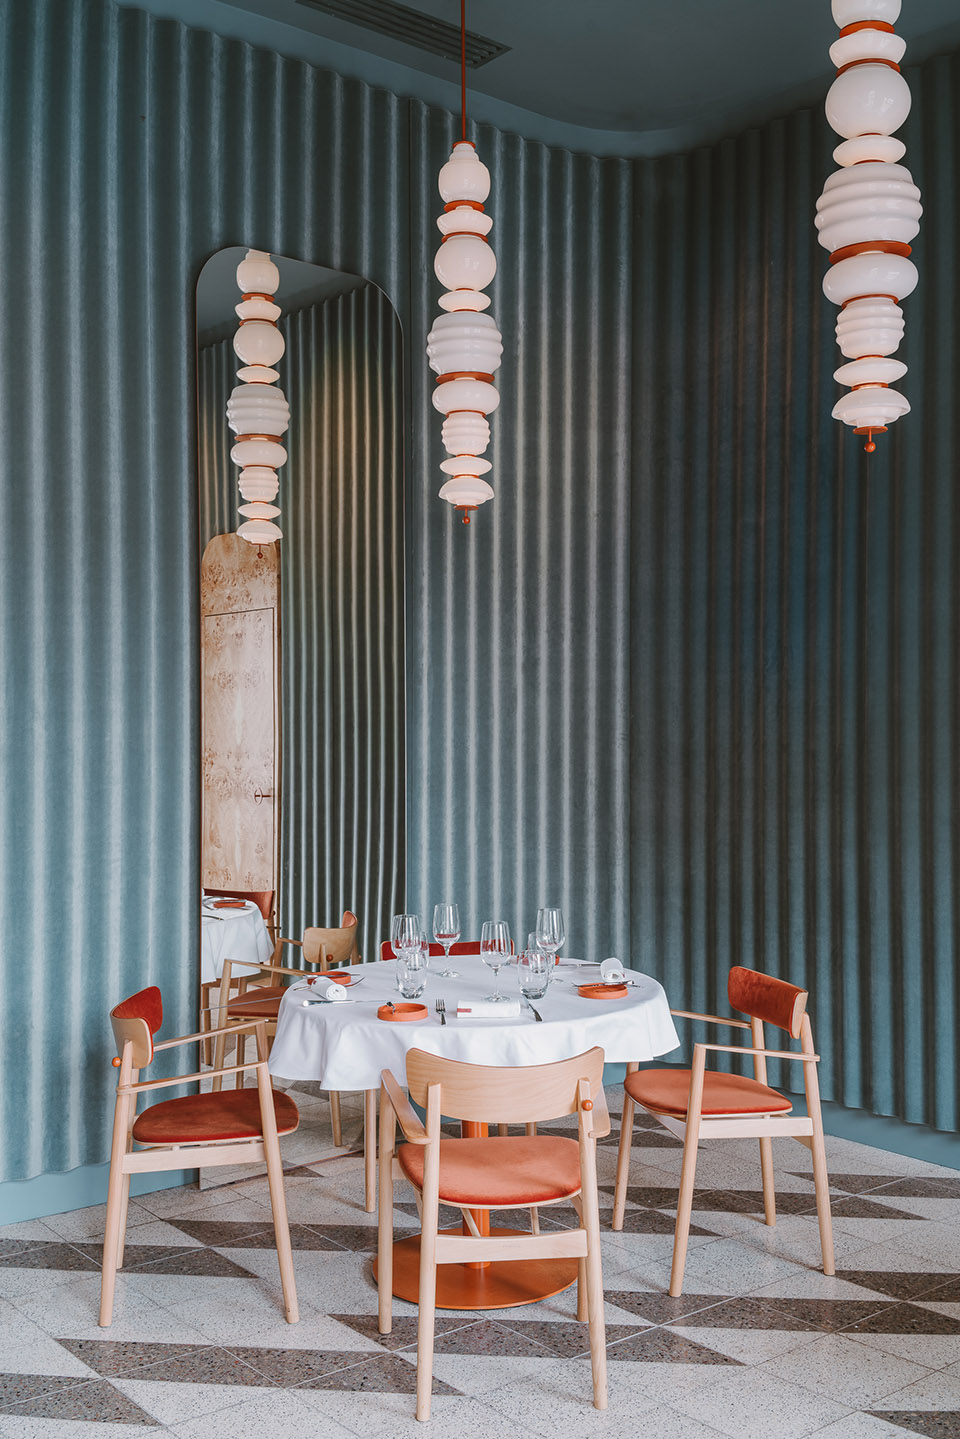 OPASLY TOM餐厅，华沙/丰富的色彩、饰面和纹理空间下的用餐体验-13